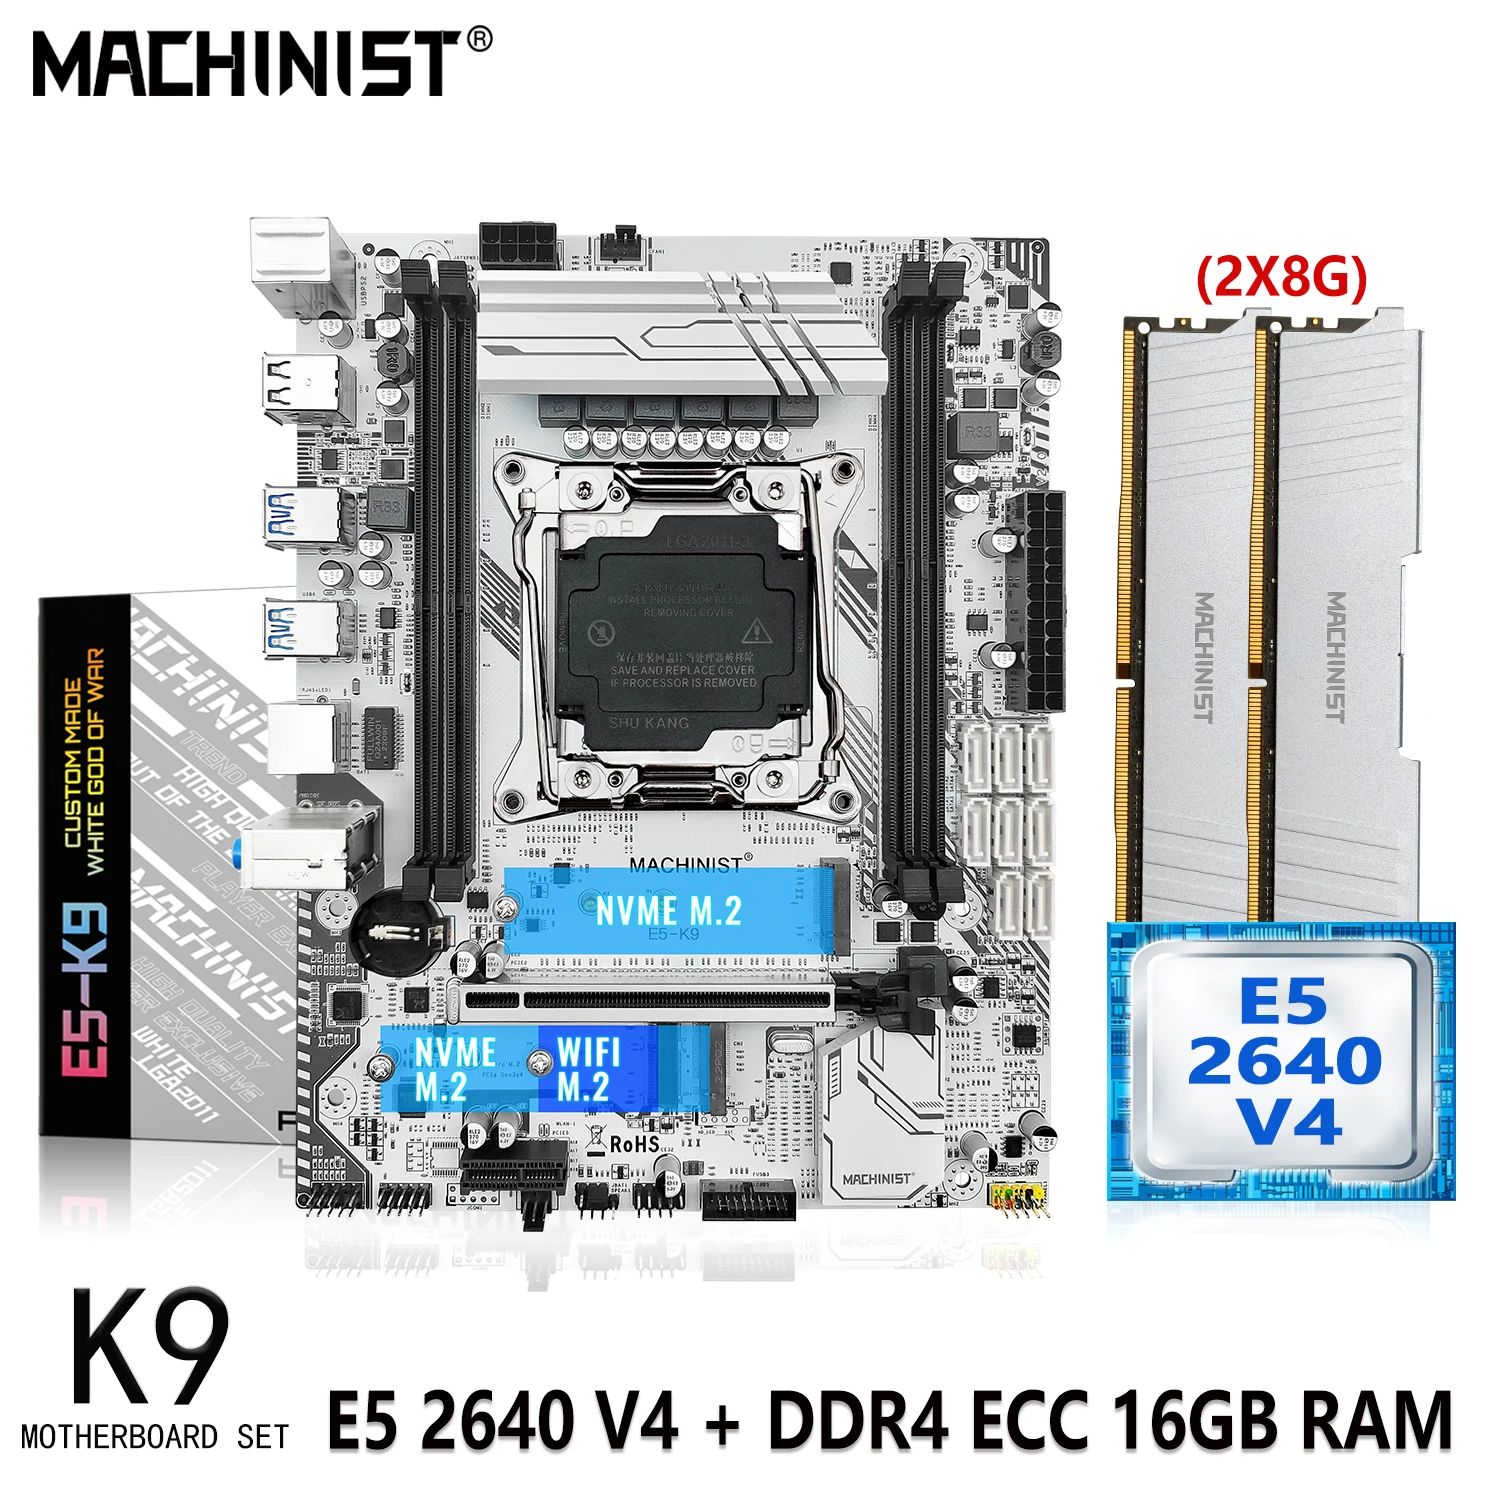 MACHINIST X99 Motherboard LGA 2011-3 Set With Xeon Kit E5 2640 V4 CPU Processor 2X8G=16GB DDR4 ECC RAM Memory Nvme Sata M.2 K9